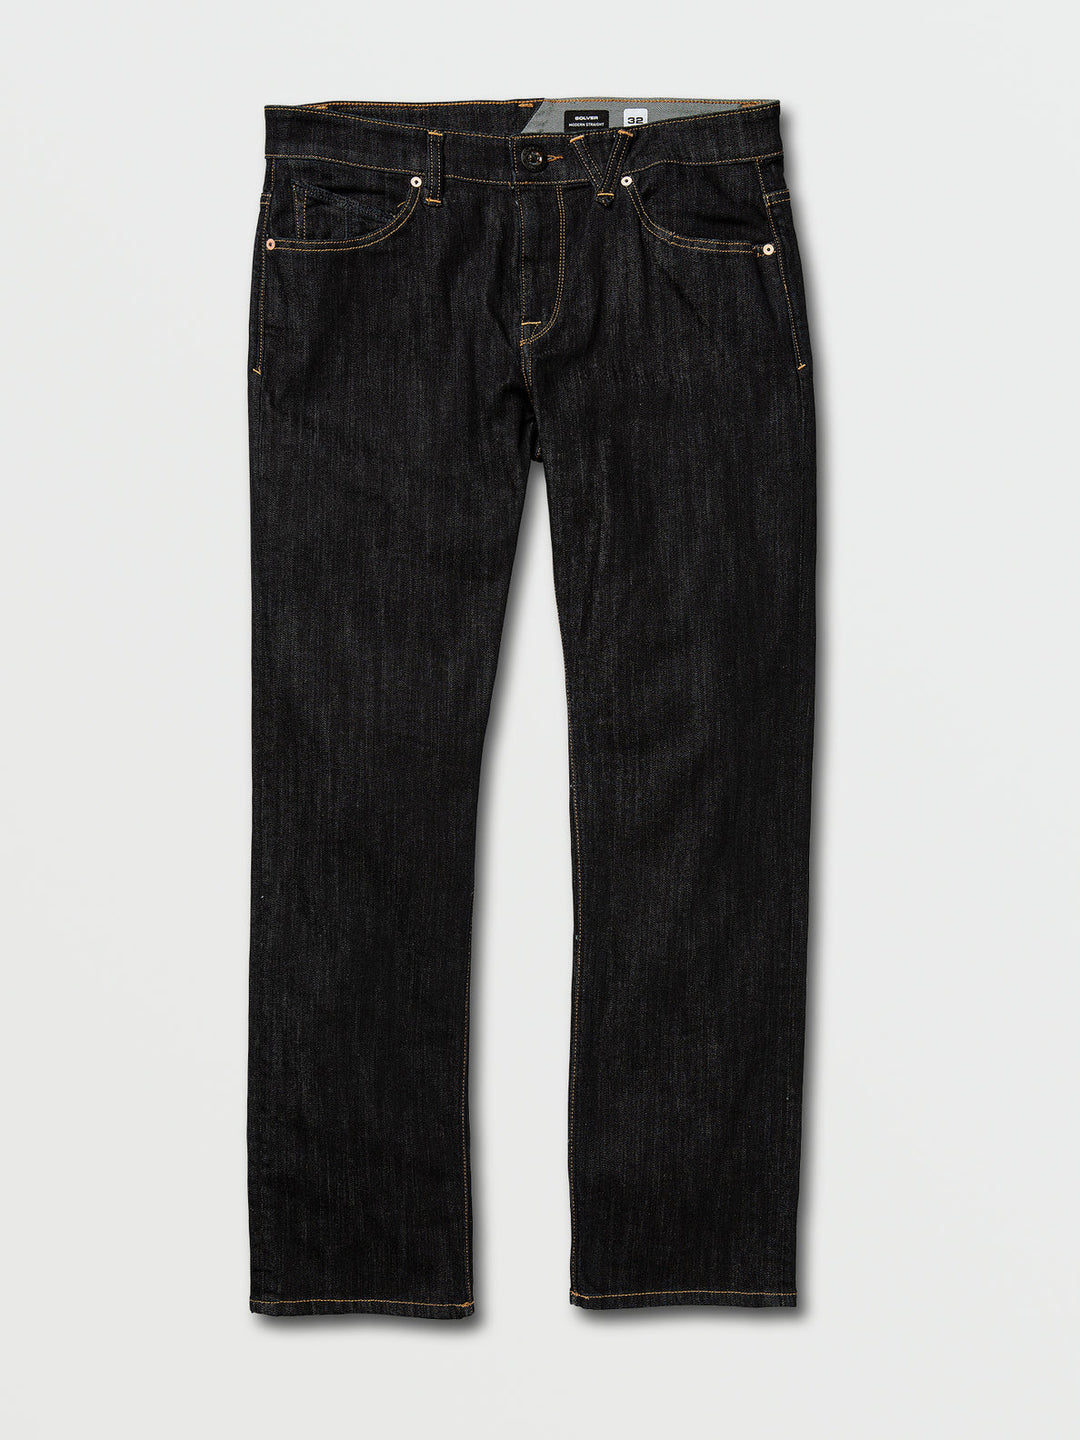 Volcom Solver Modern Fit Jeans - Rinse - Sun Diego Boardshop